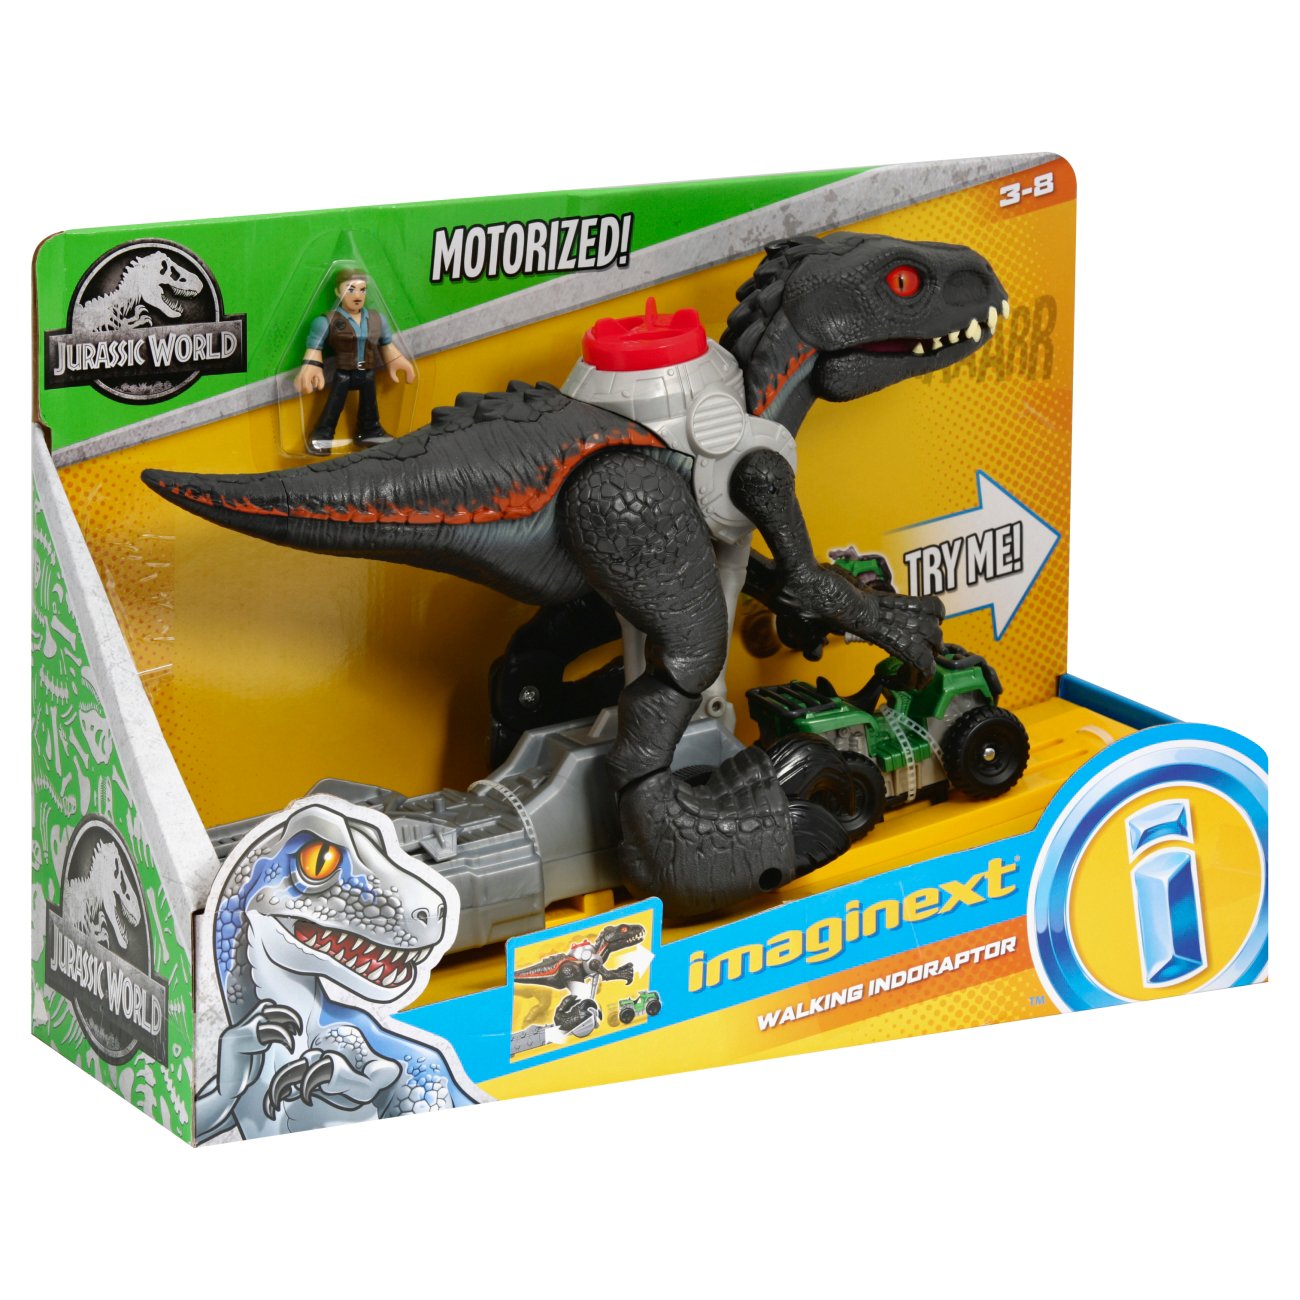 indoraptor toy imaginext